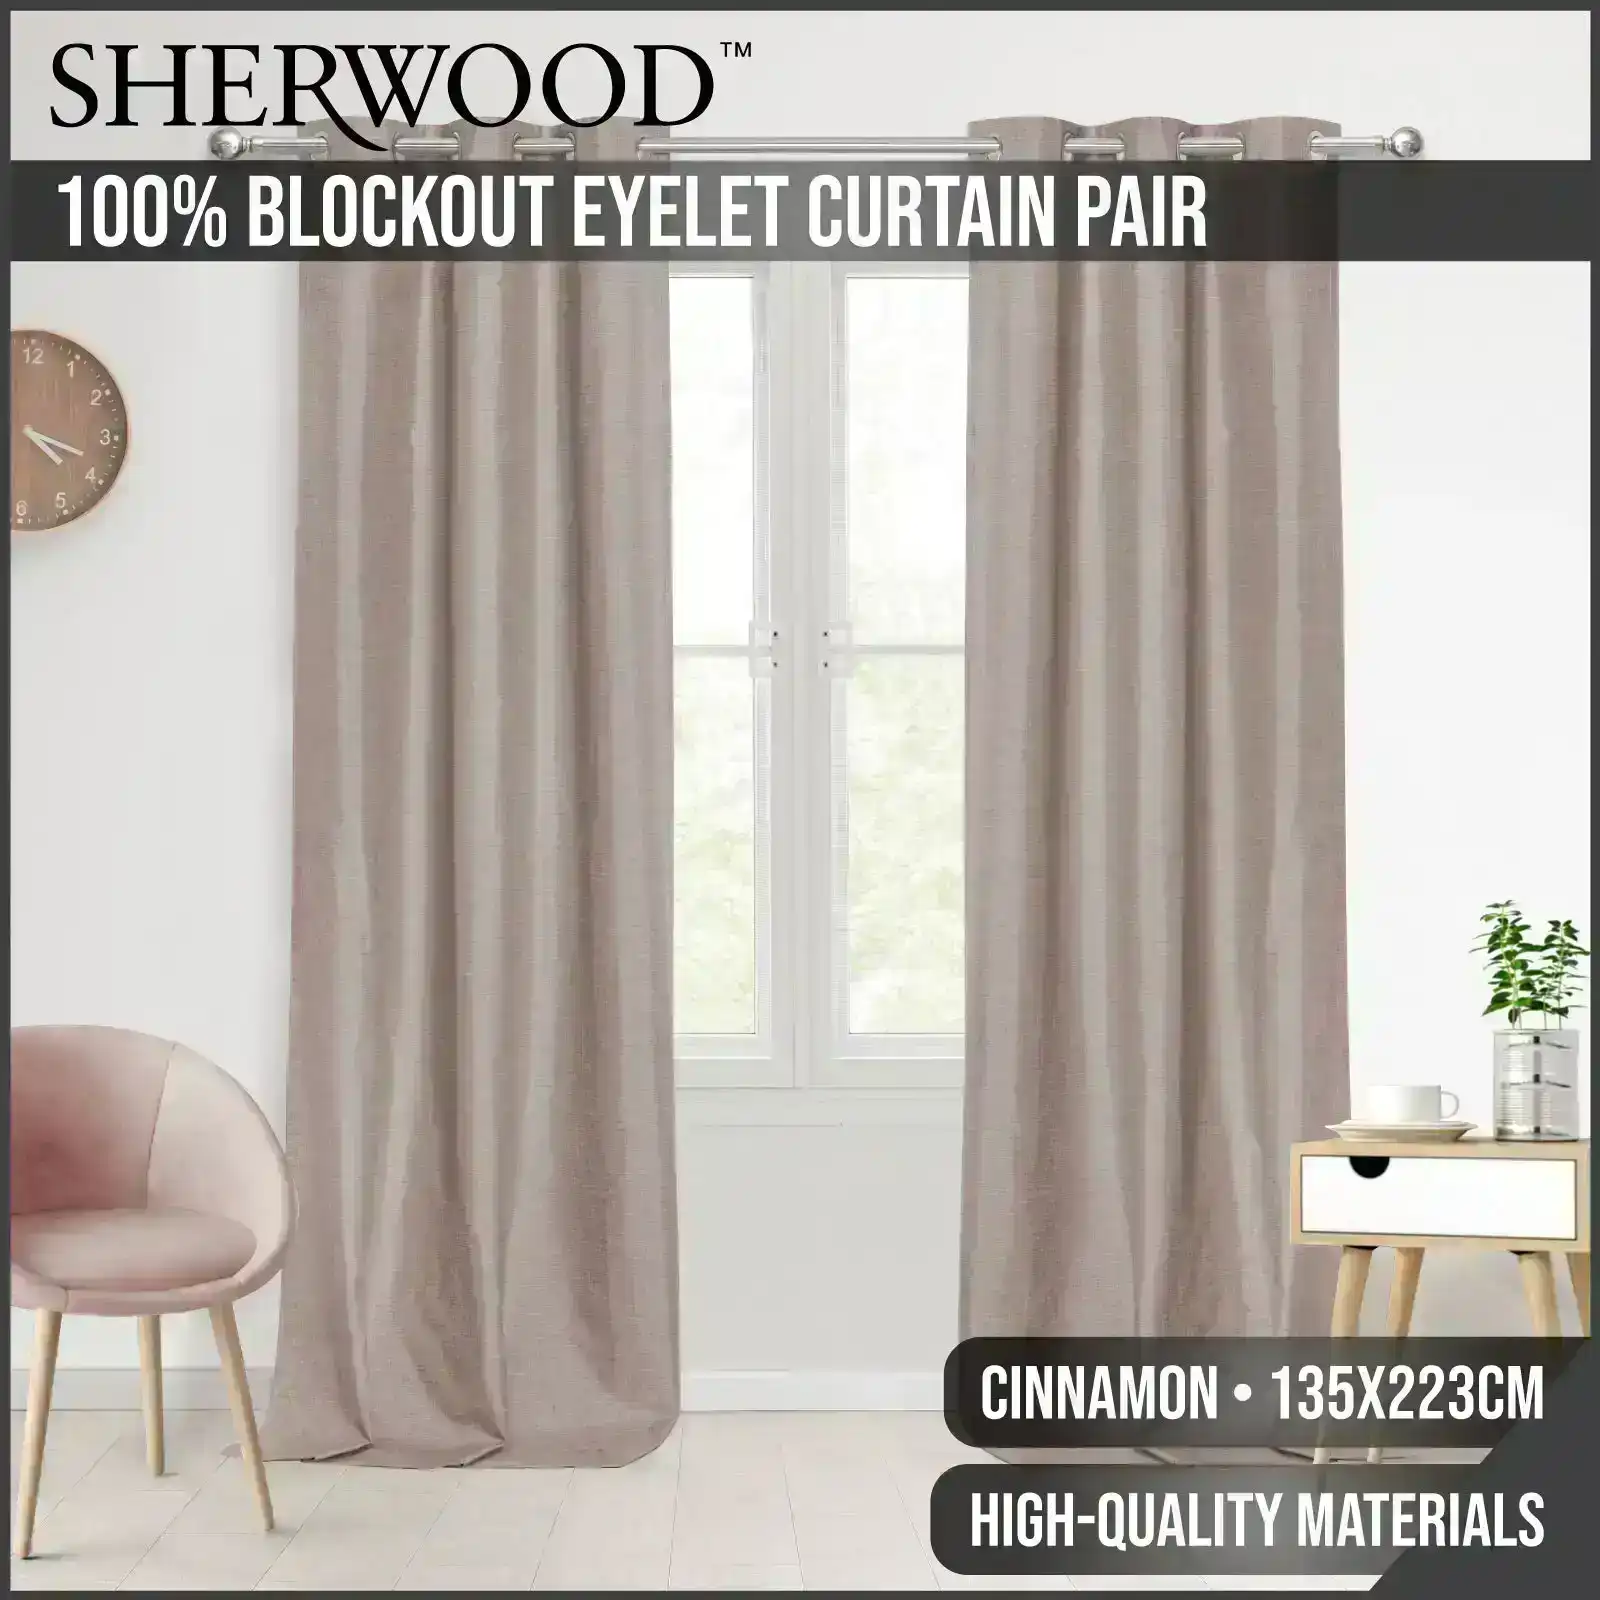 Sherwood Home 100% Blockout Eyelet Curtain Pair Cinnamon 135x223cm